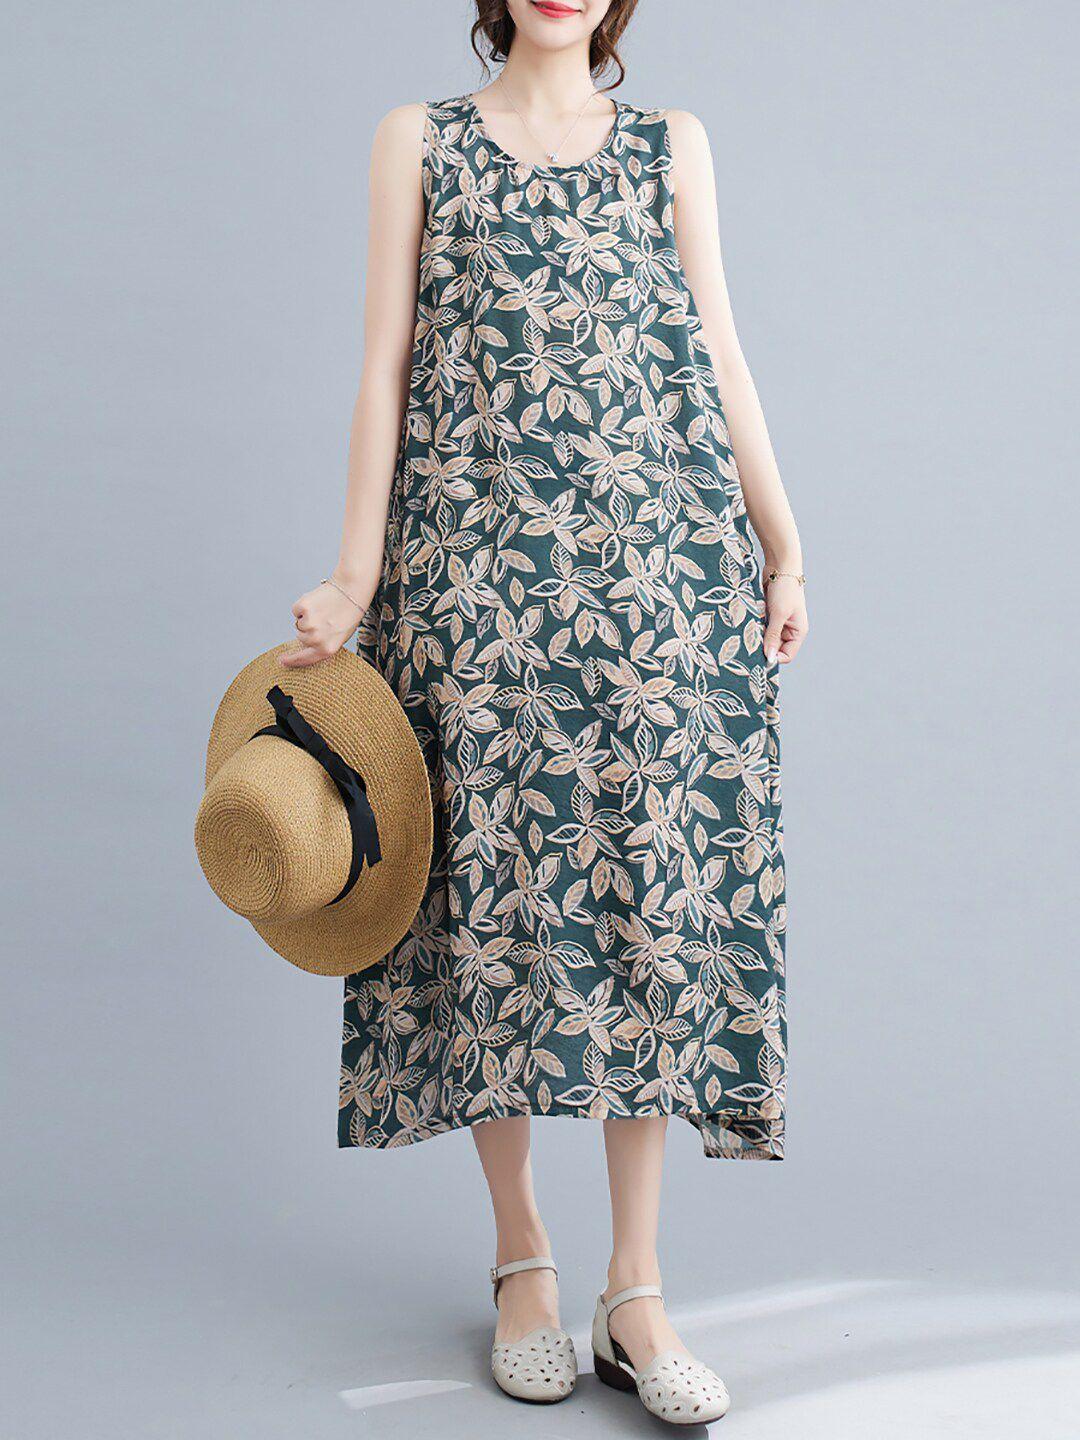 jc mode floral printed sleeveless a-line dress